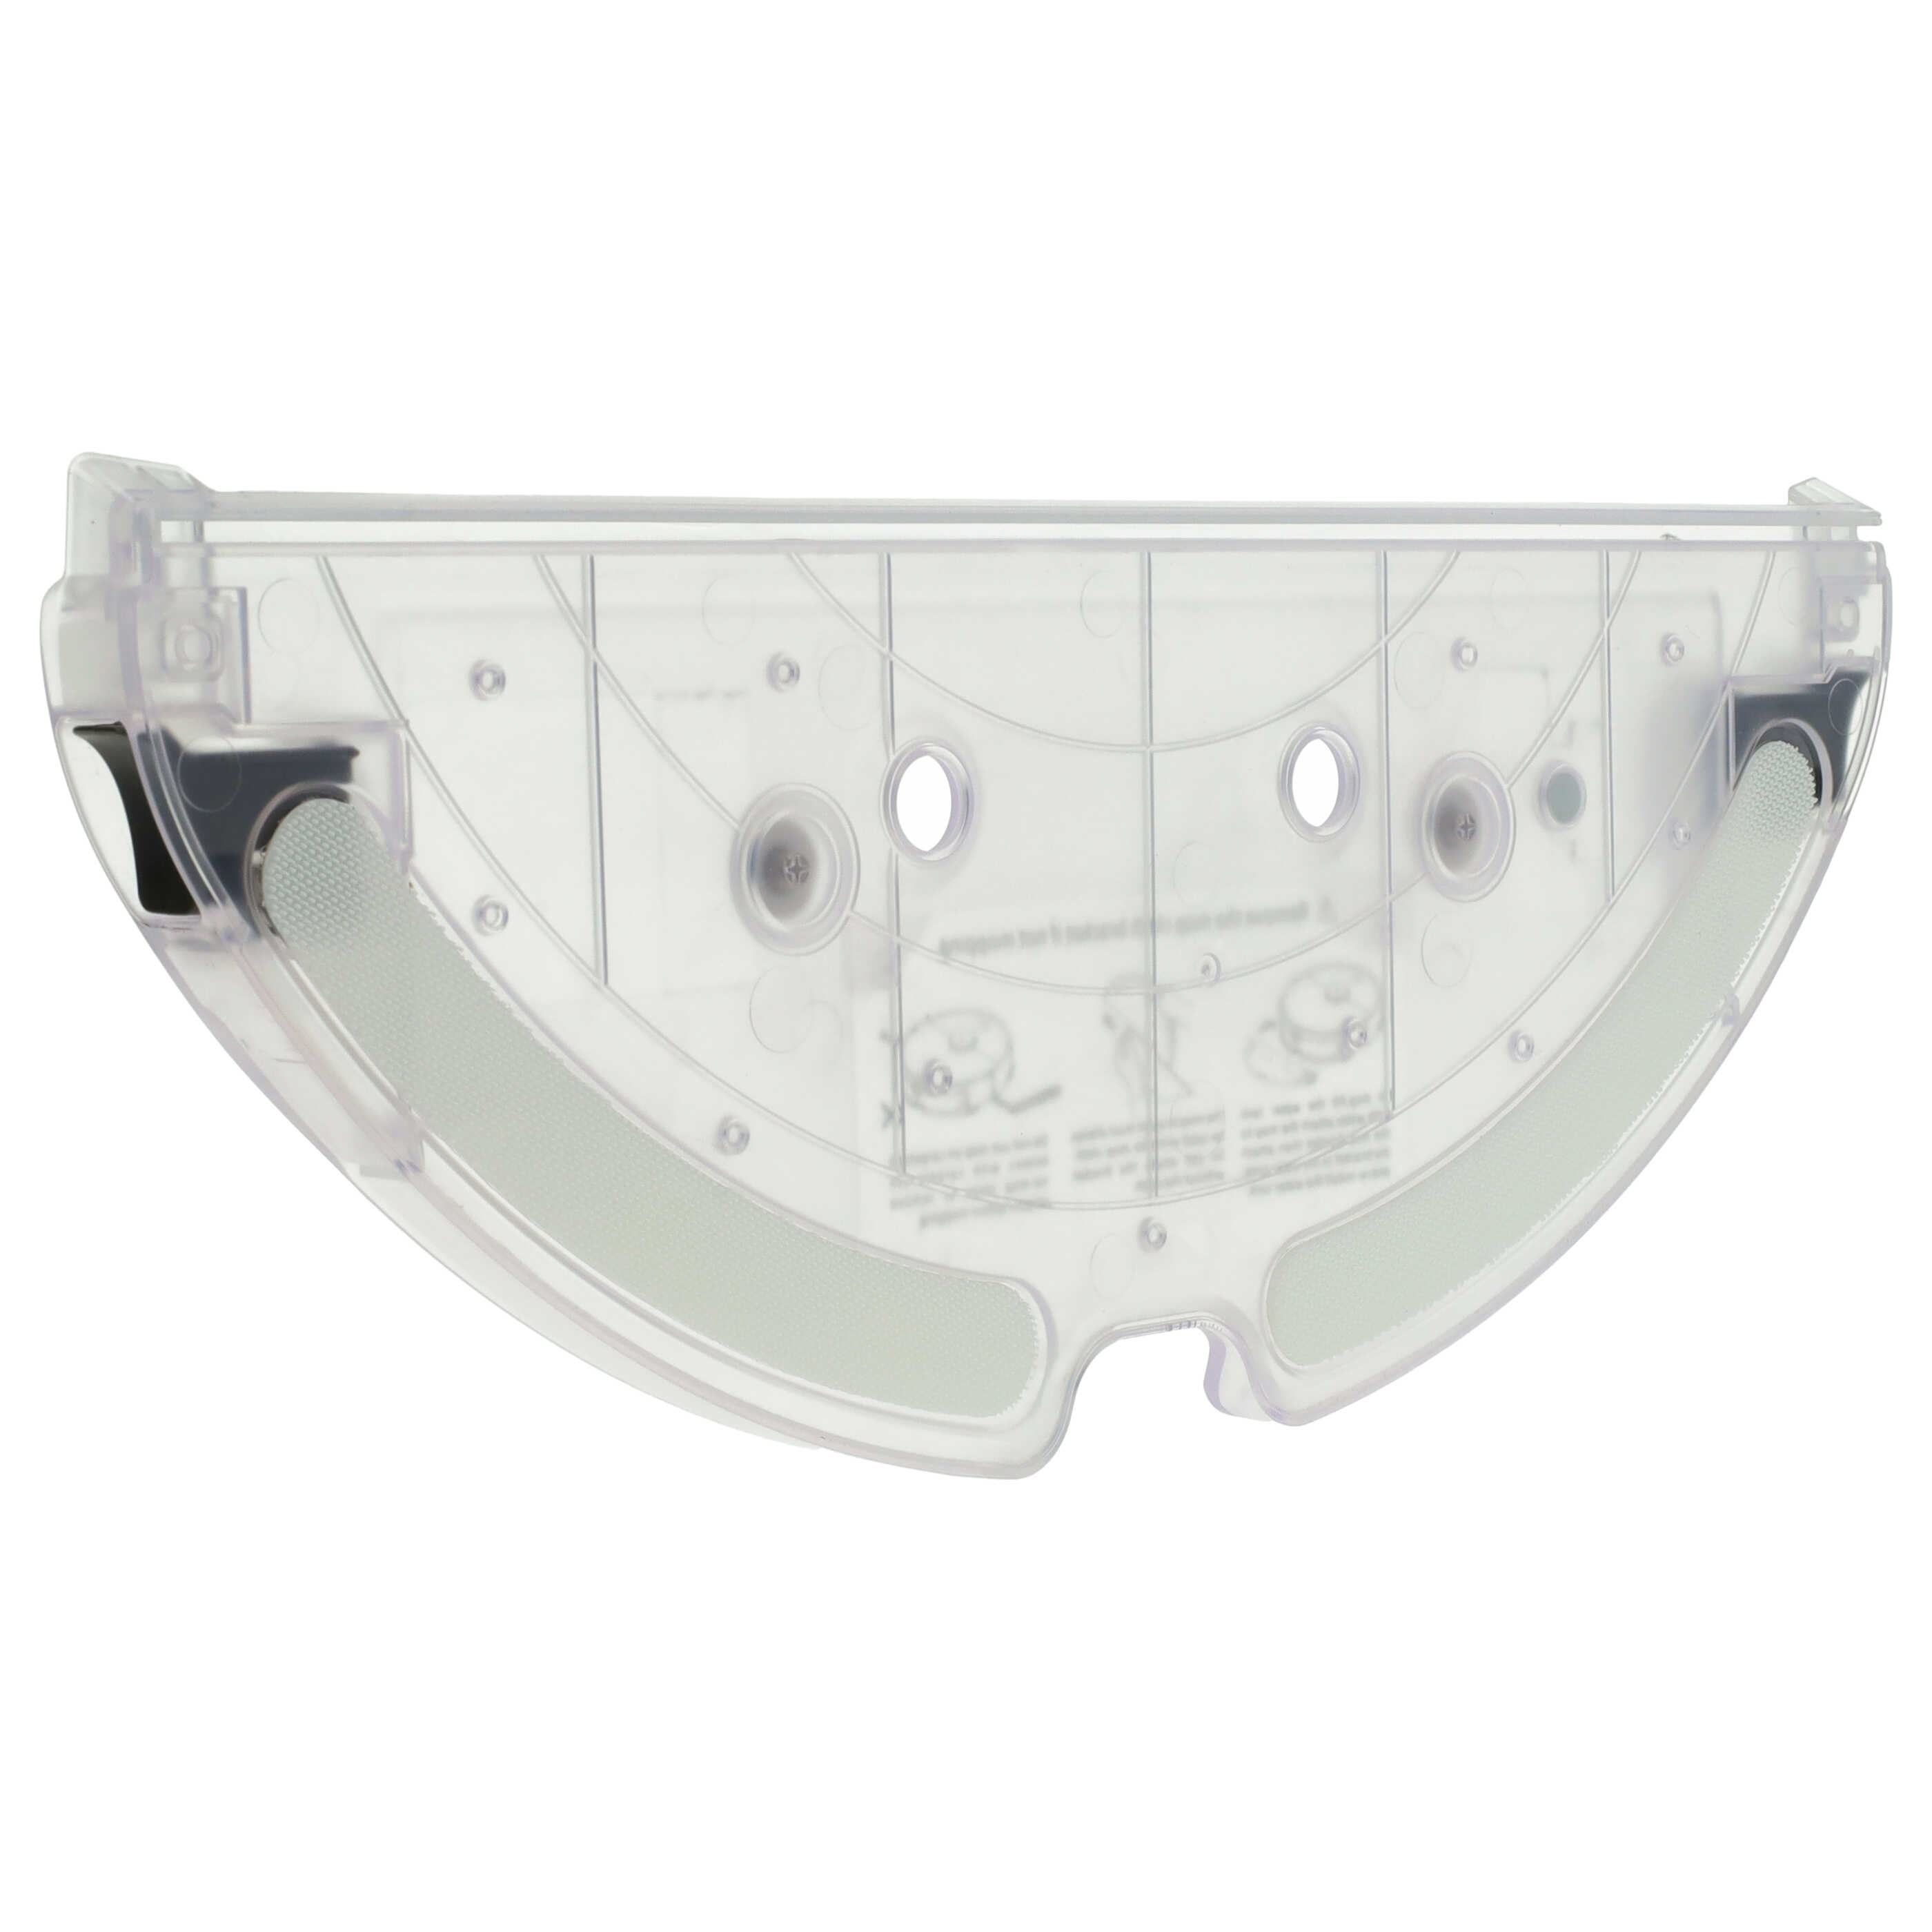 Mop Plate suitable for Roborock S5 Max Robot Vacuum Cleaner - ABS Plastic, transparent / black